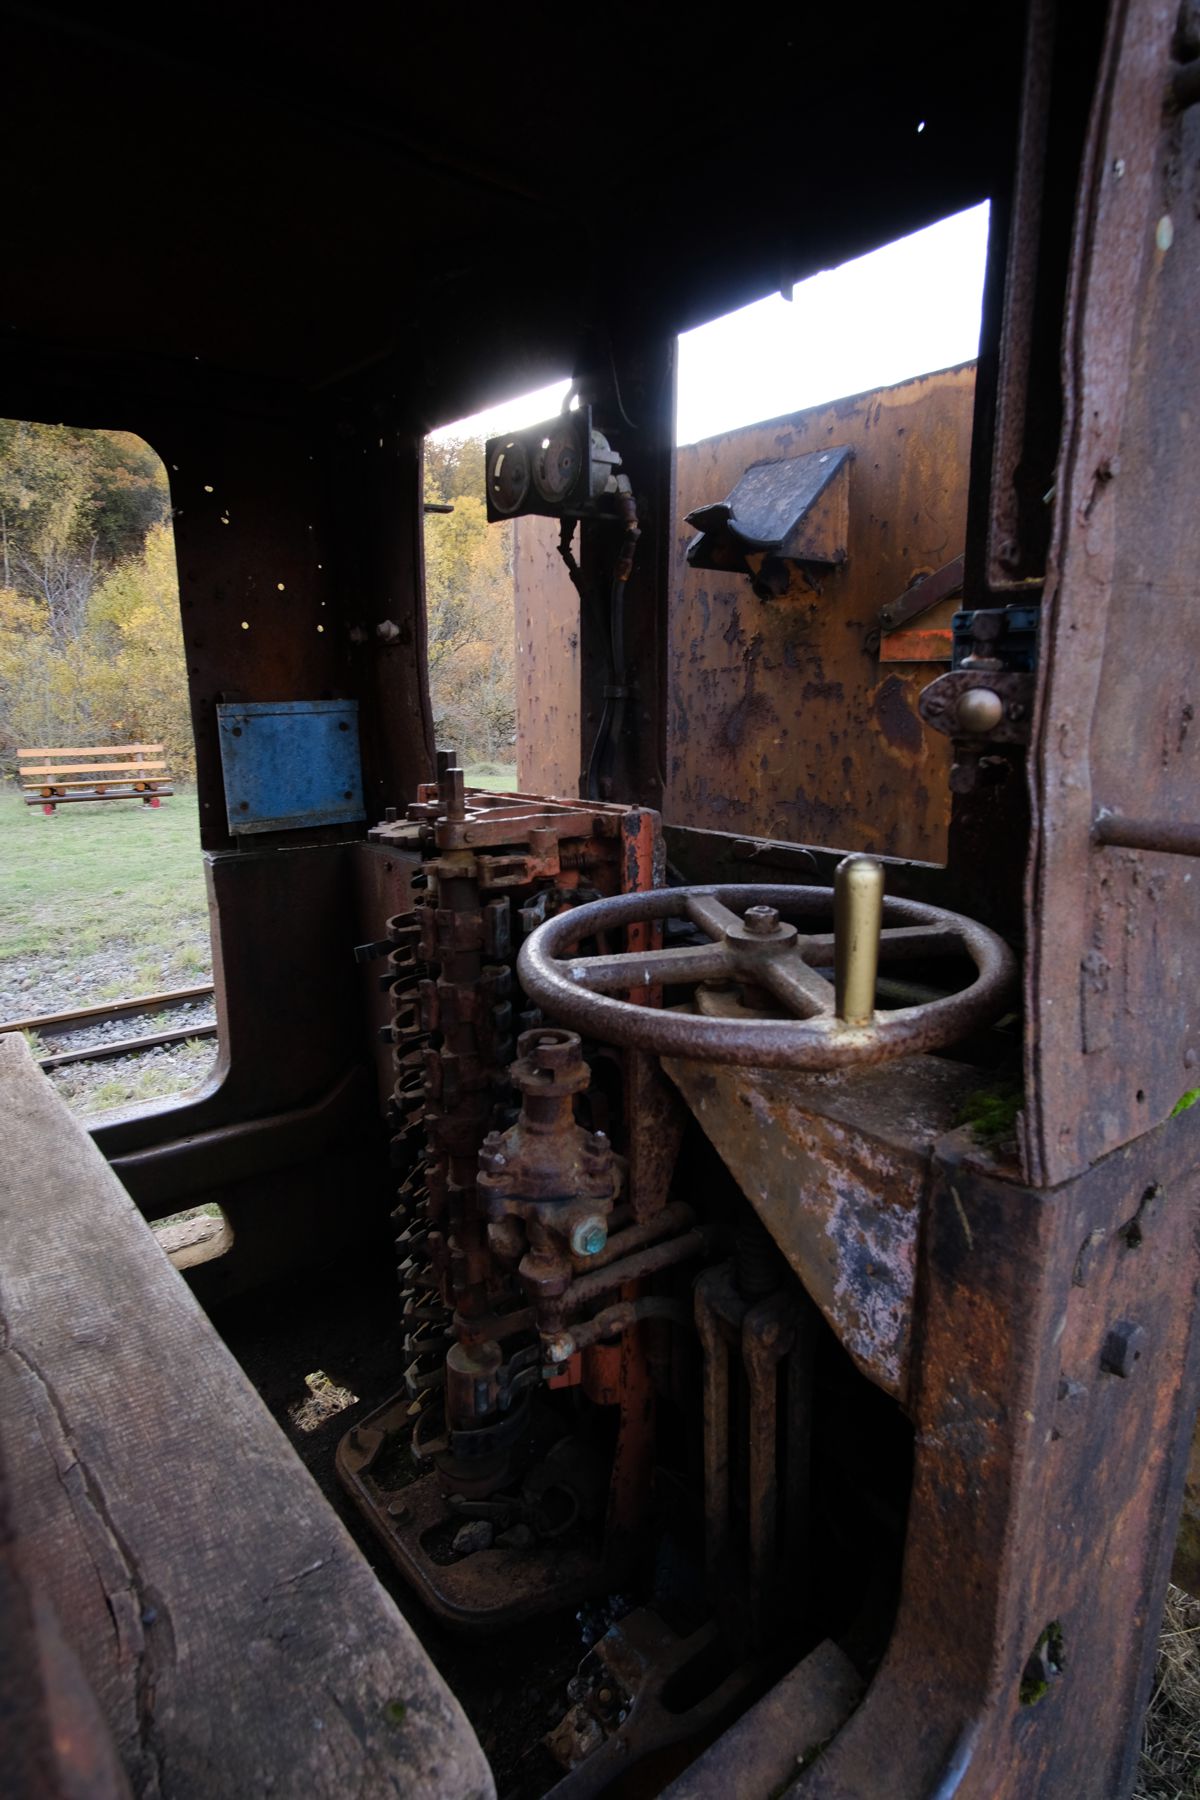 Abandoned coal train engine - inside